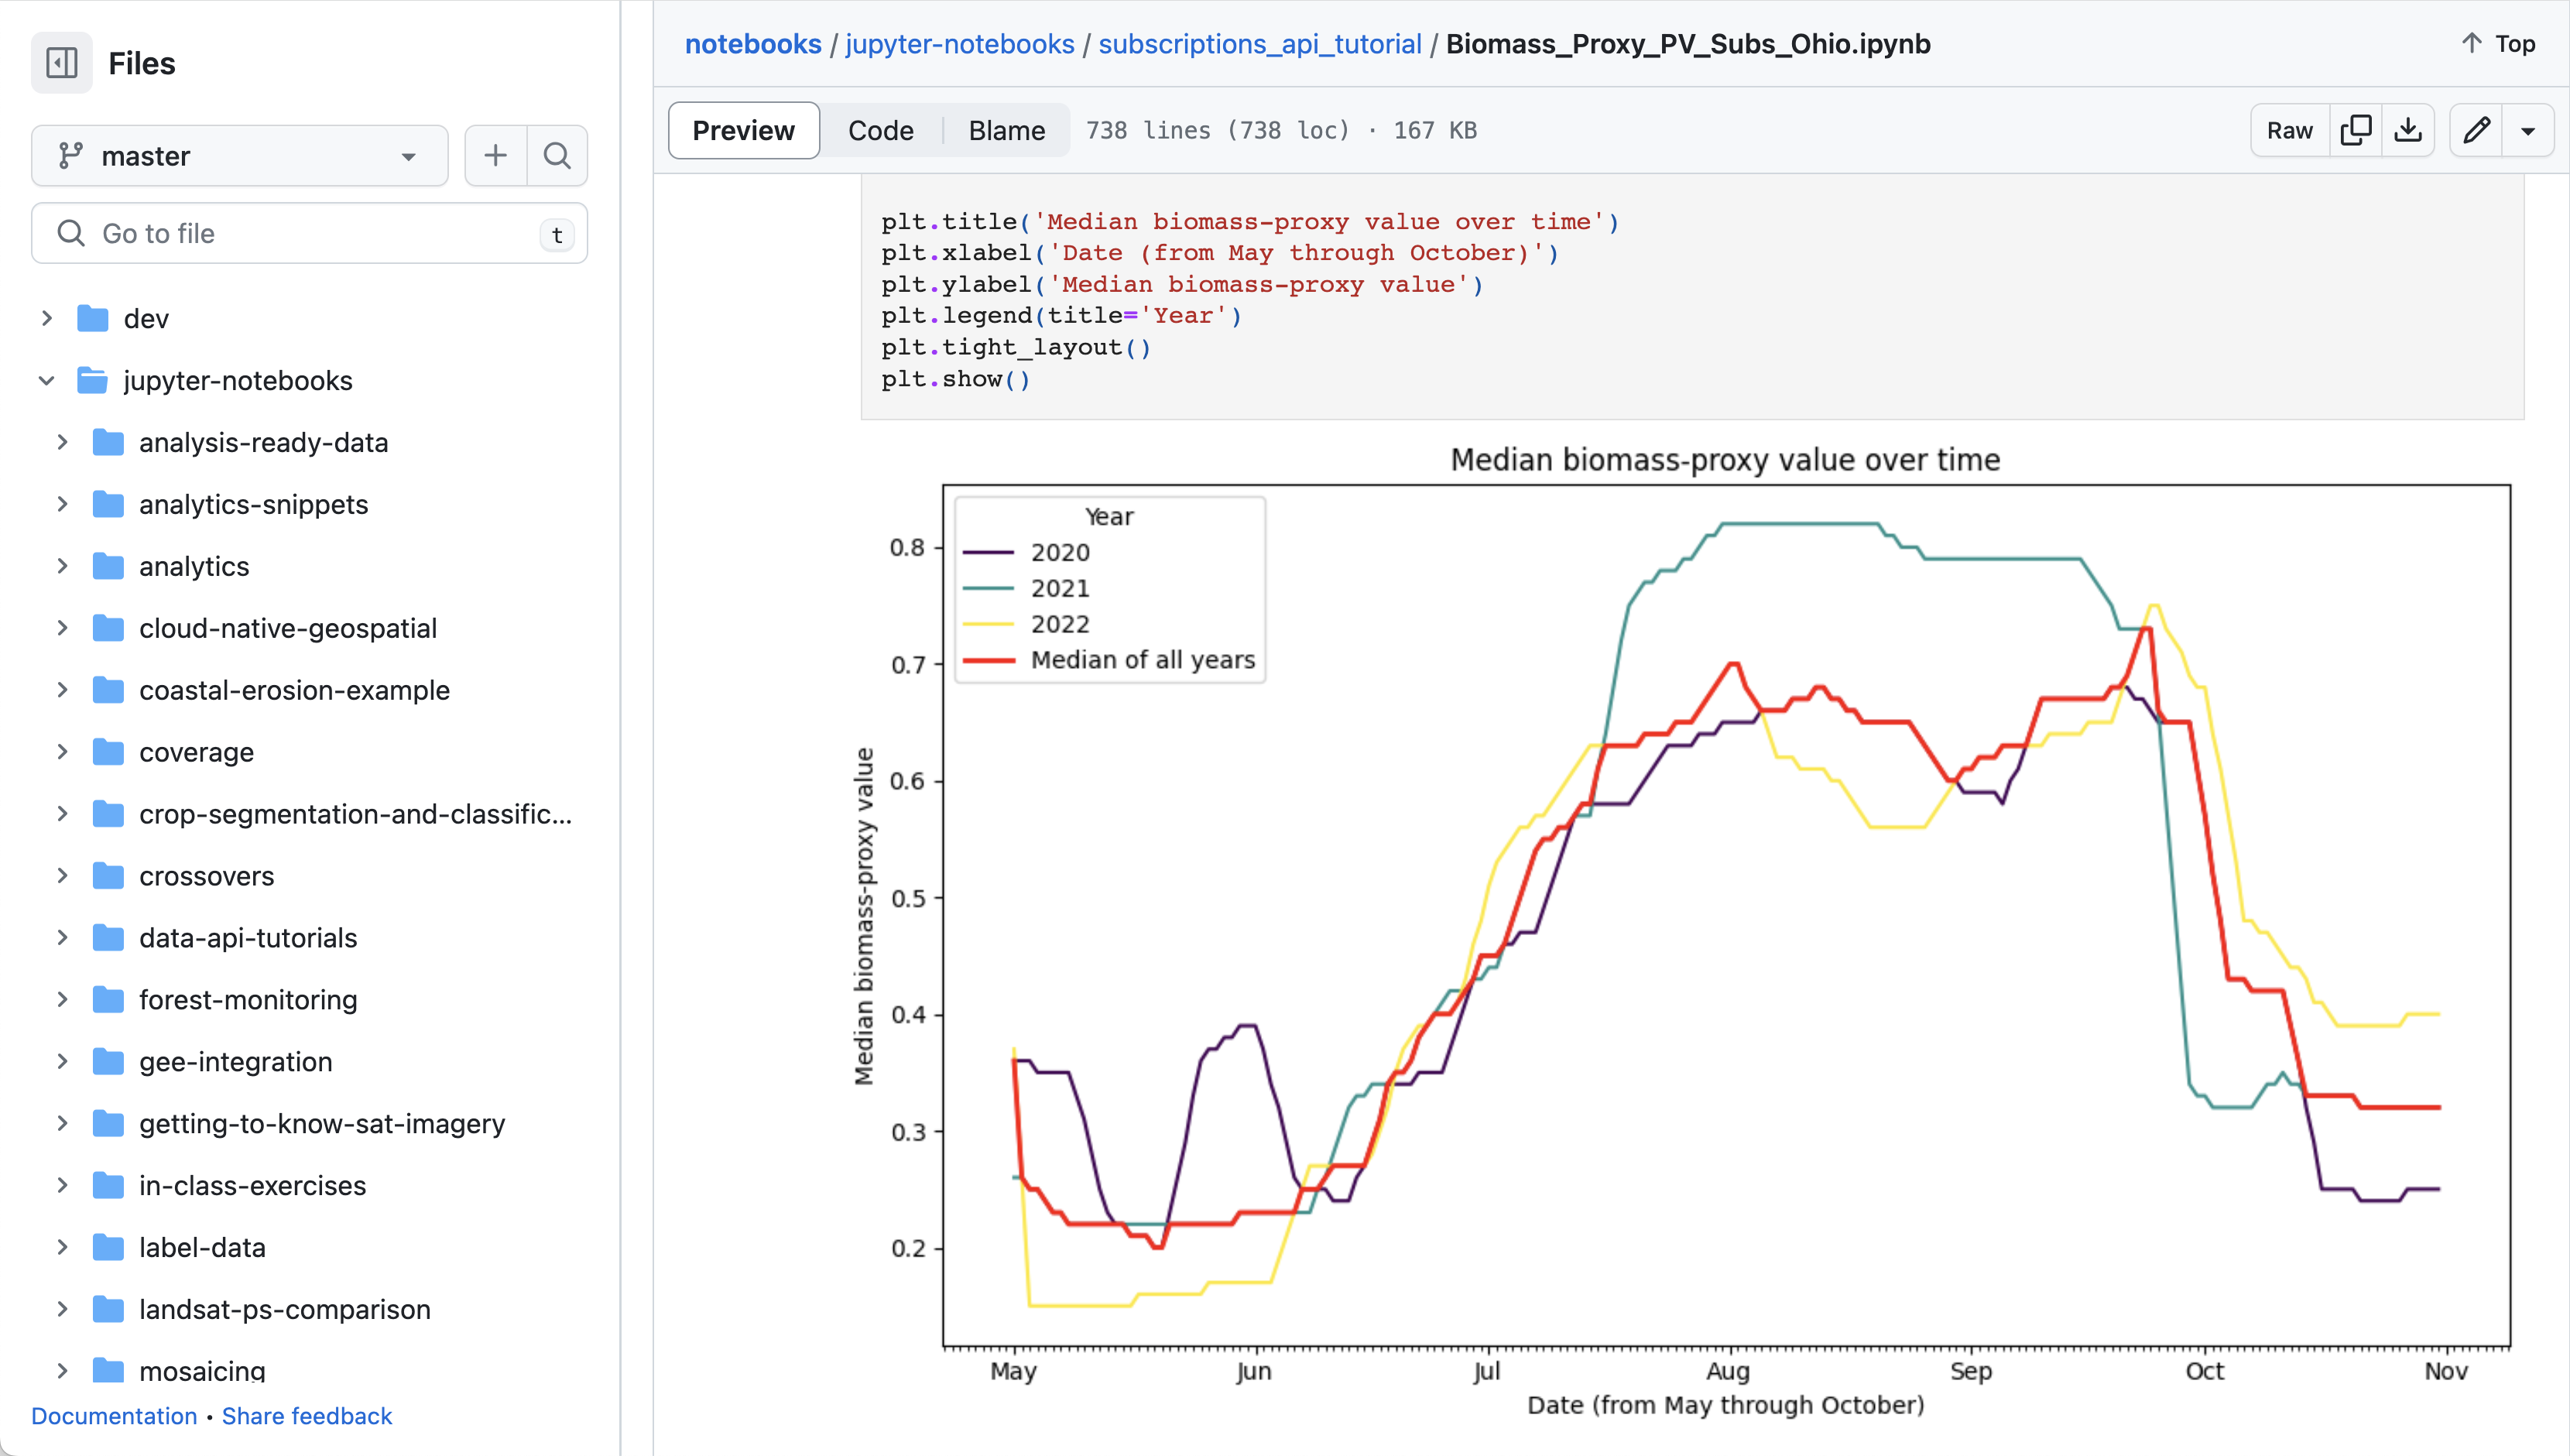 Python Notebooks demostrating API for transmitting data and analysis